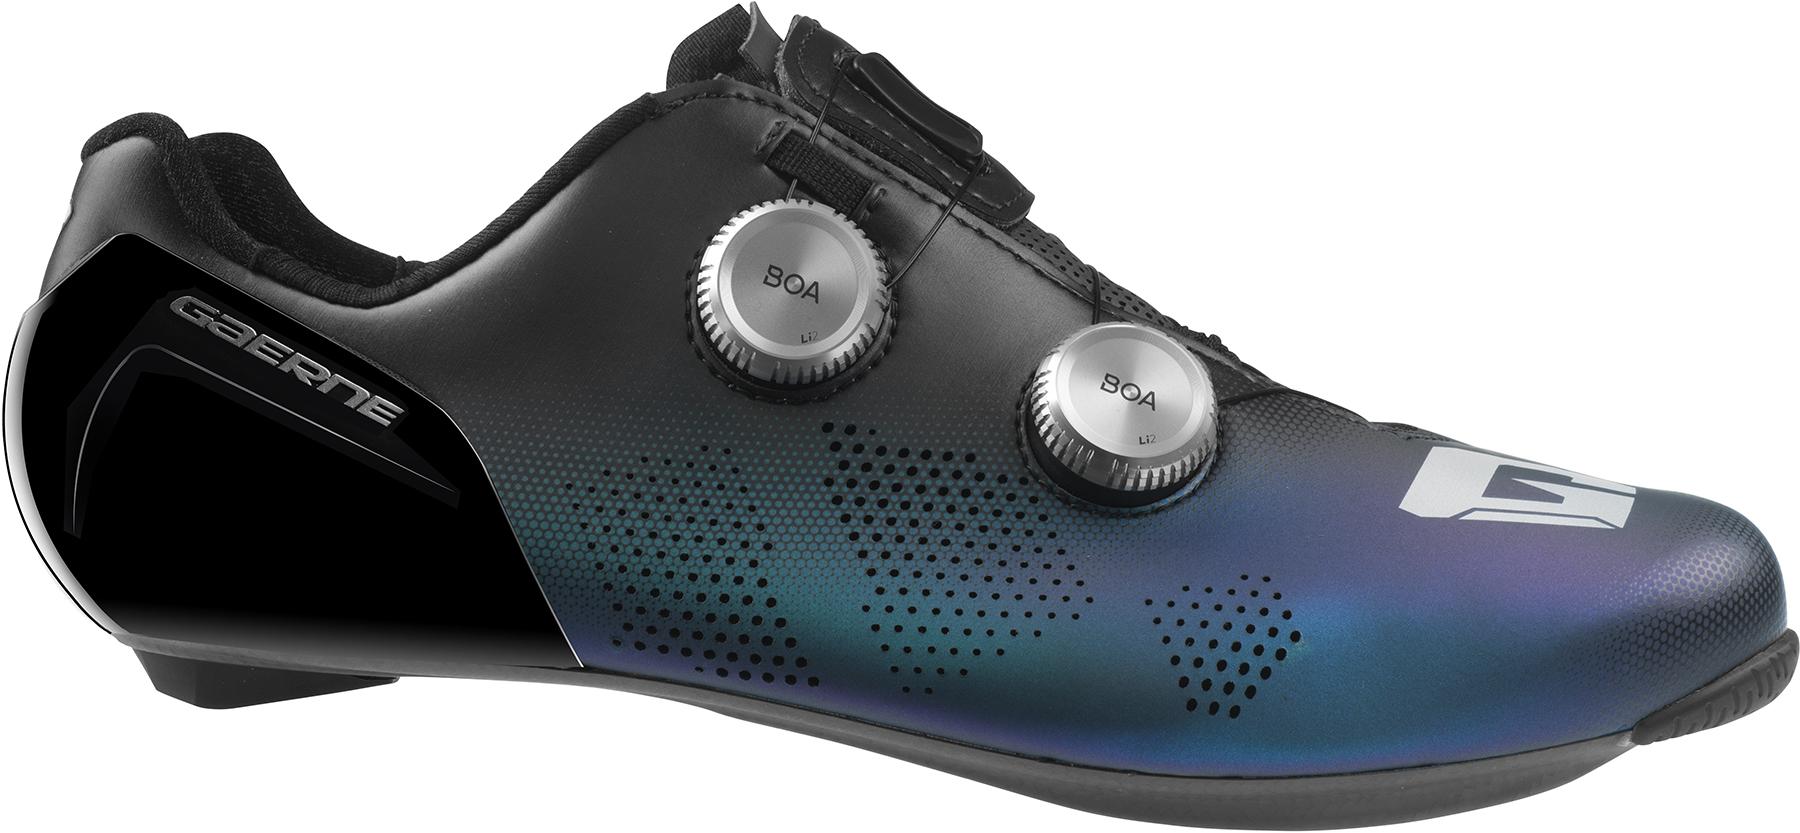 Gaerne Carbon G.stl Shoes - Multi